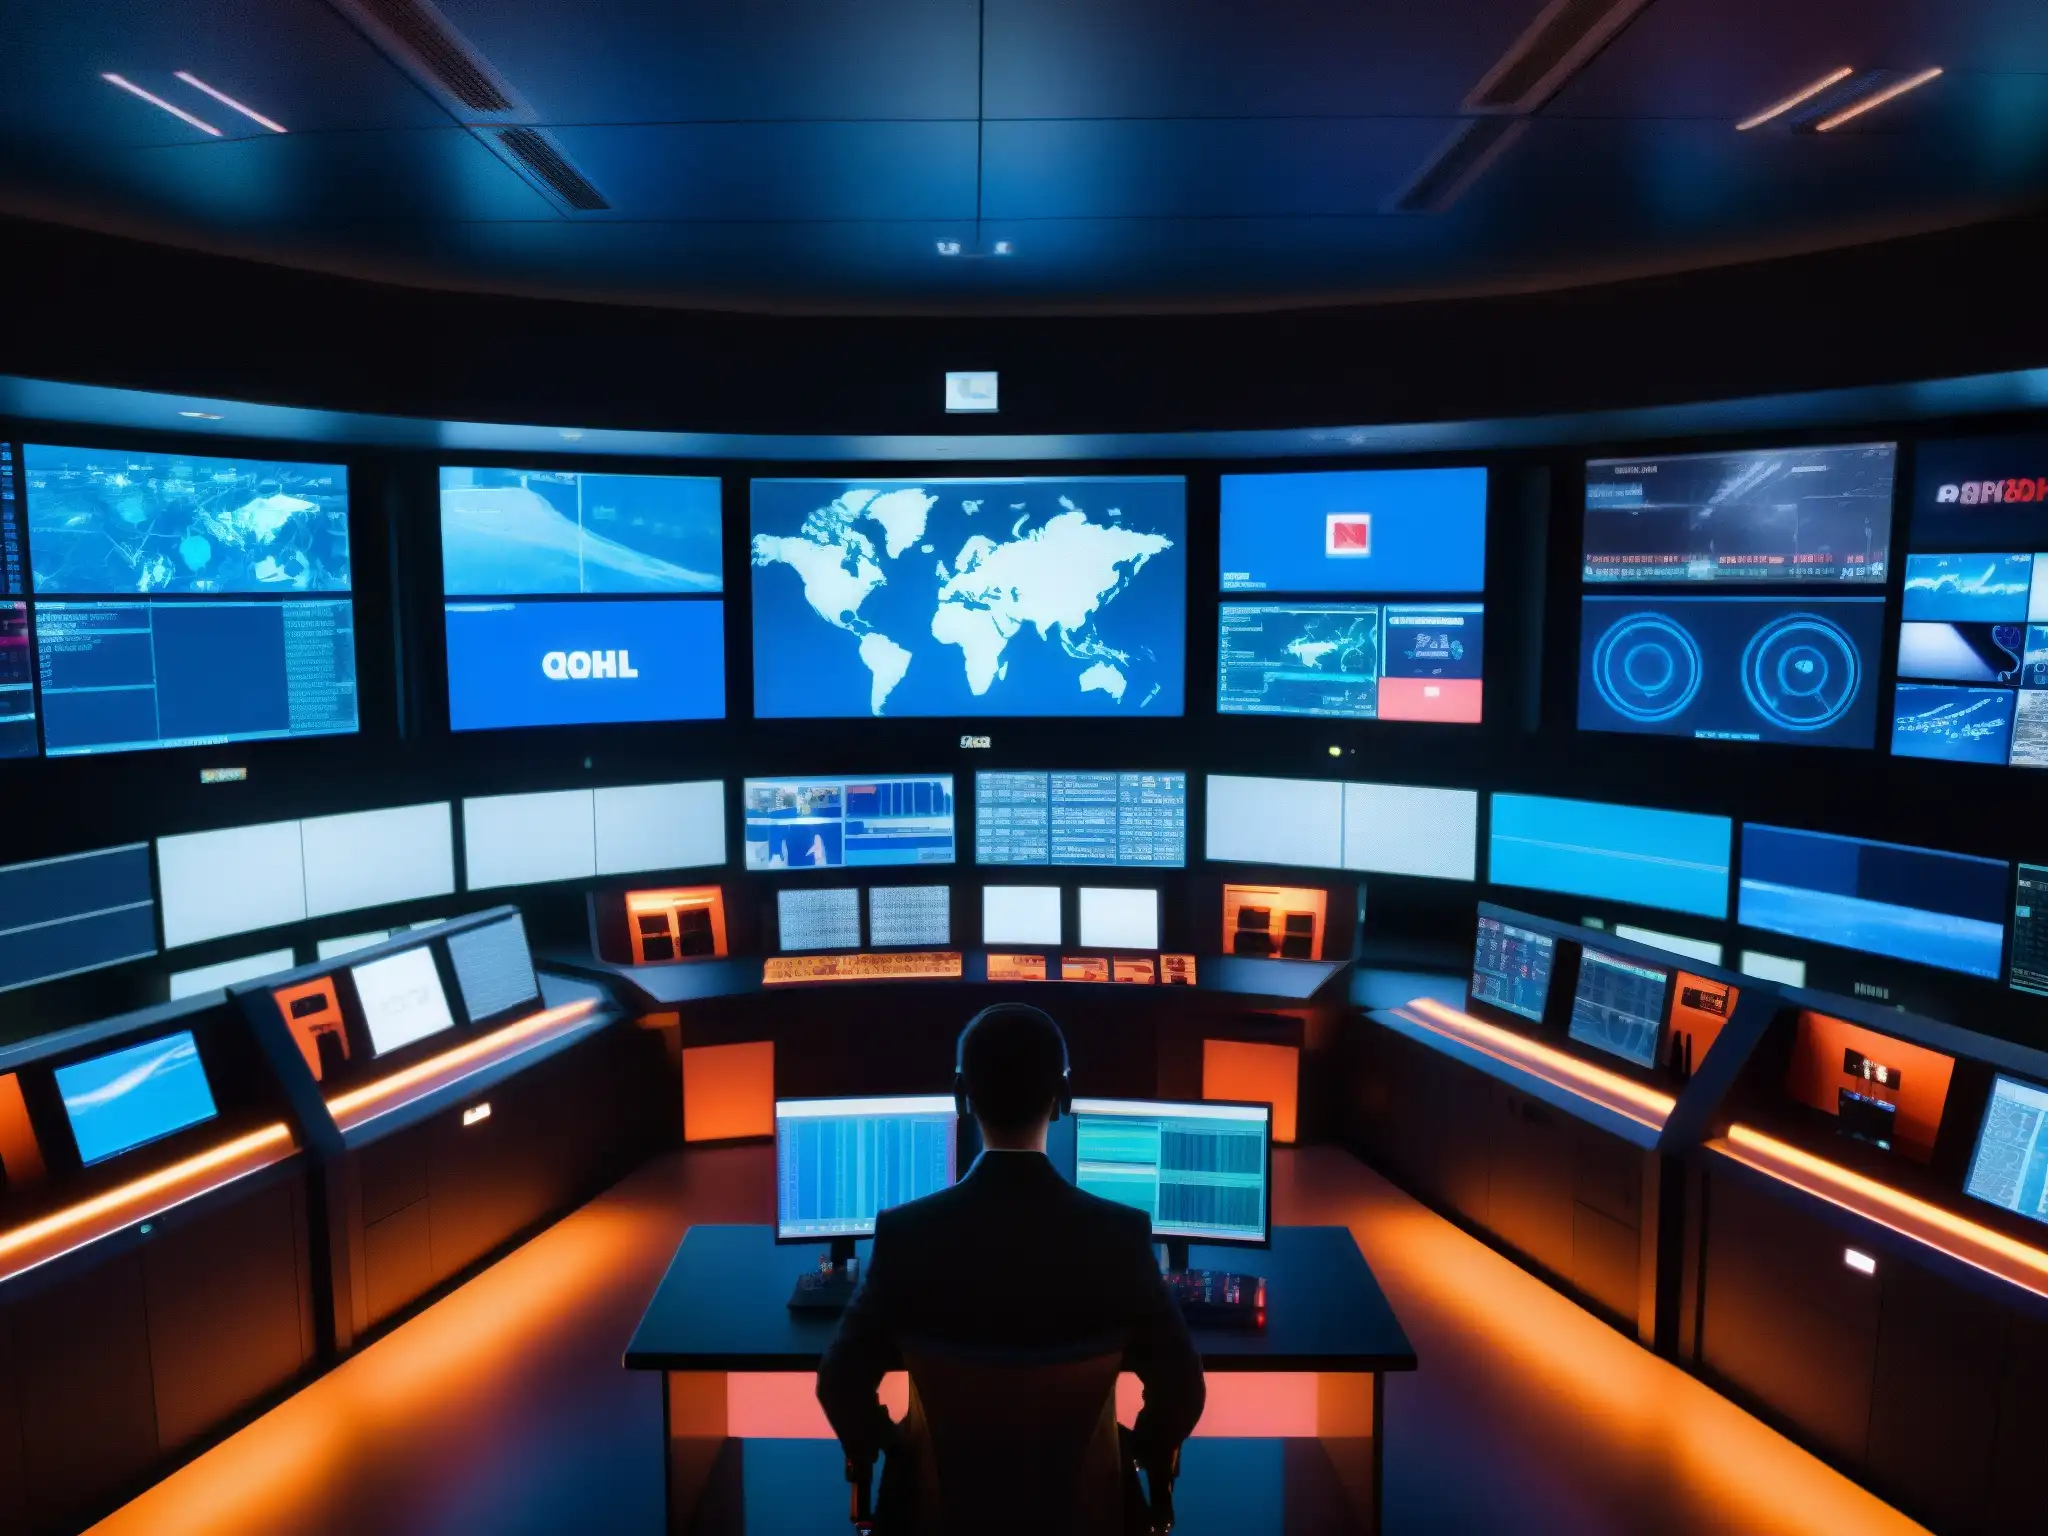 Sociedades secretas operan red control global: equipo en sala de monitores, rostros iluminados por pantallas, atmósfera tensa